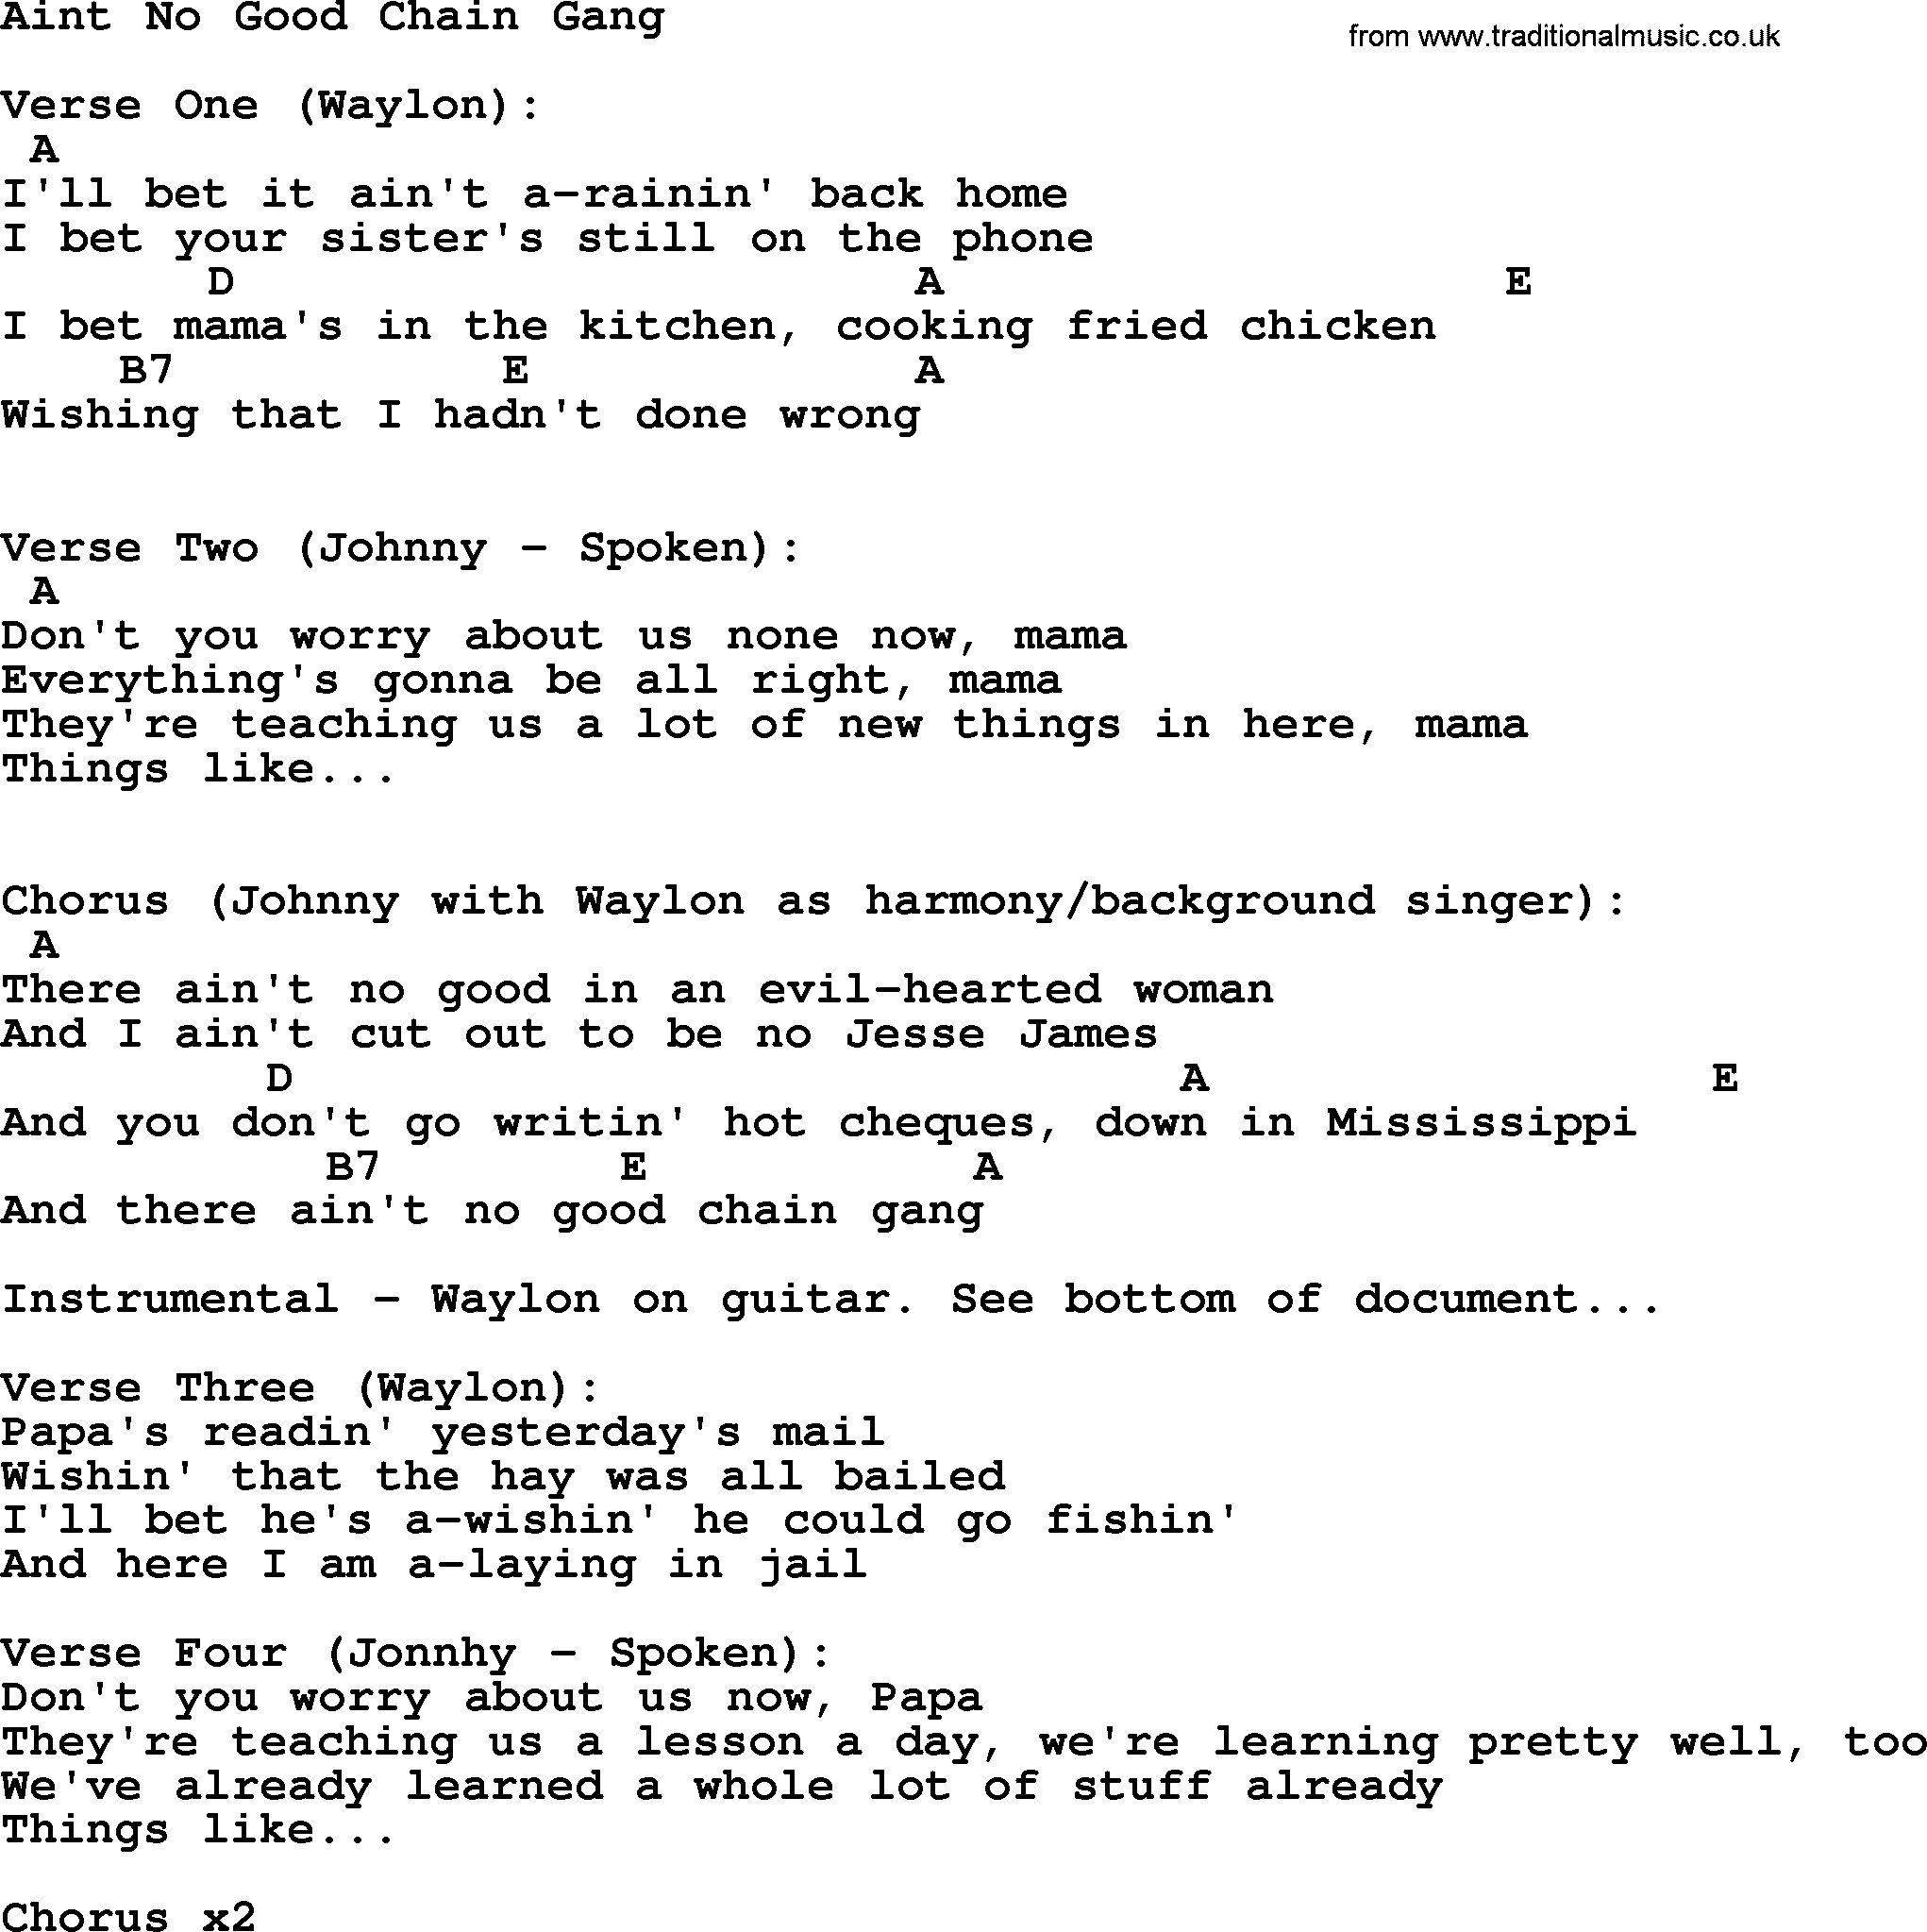 Johnny Cash song Aint No Good Chain Gang, lyrics and chords